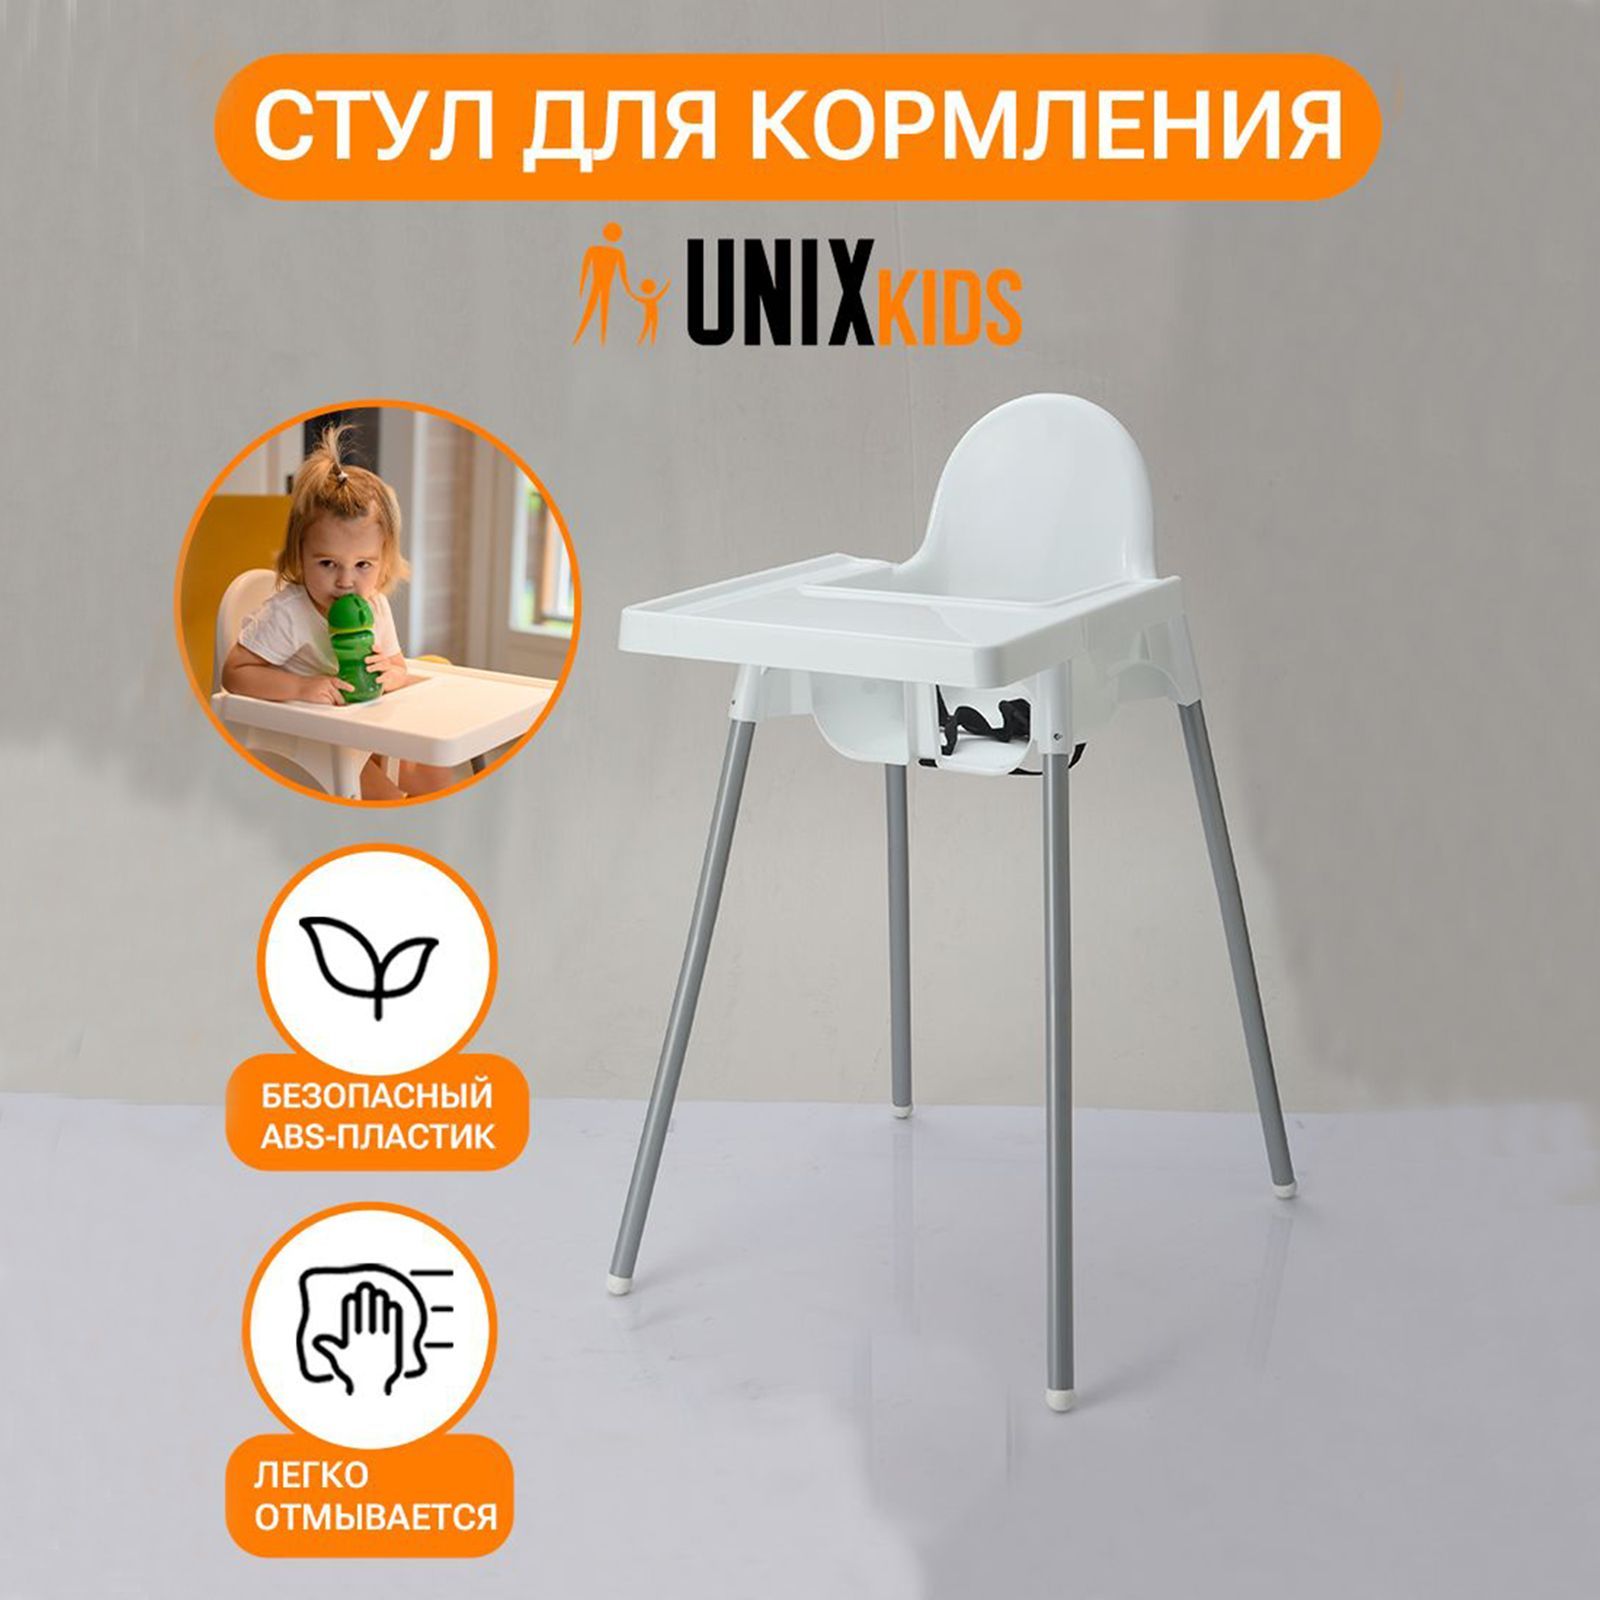 Стульчик для кормления UNIX Kids Fixed White - аналог ИКЕА, со столиком стульчик для кормления unix kids fixed rose аналог икеа со столиком